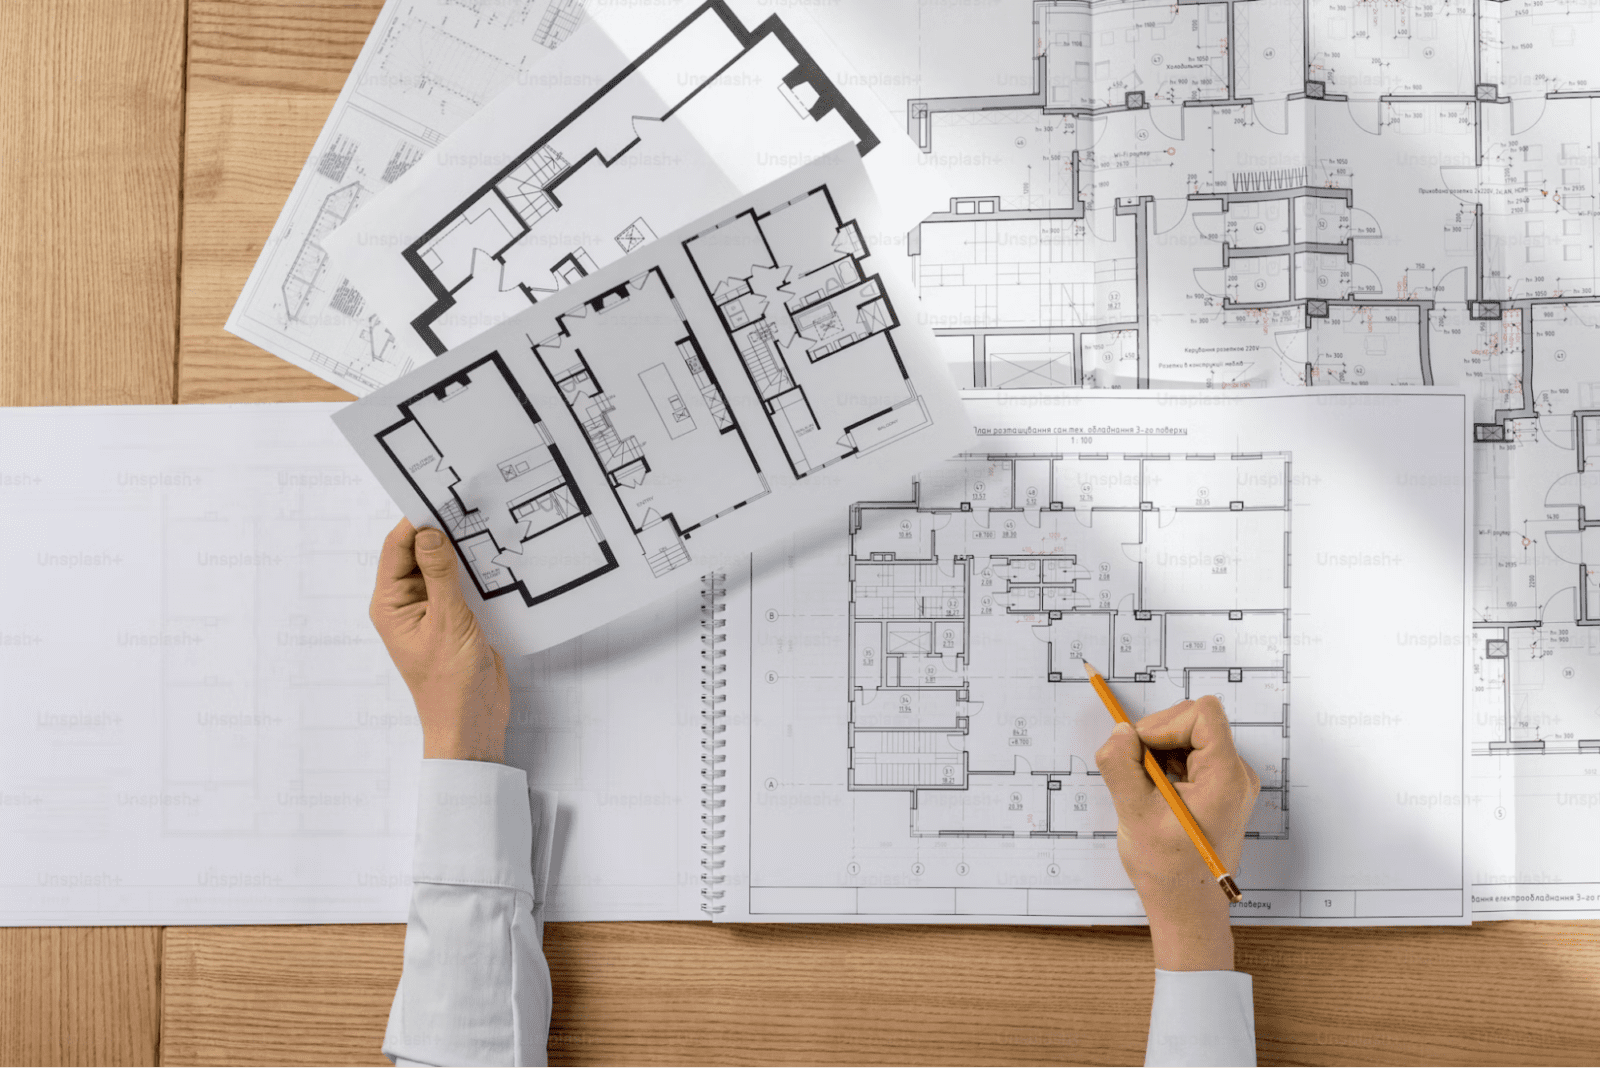 An architect develops architectural floor plans